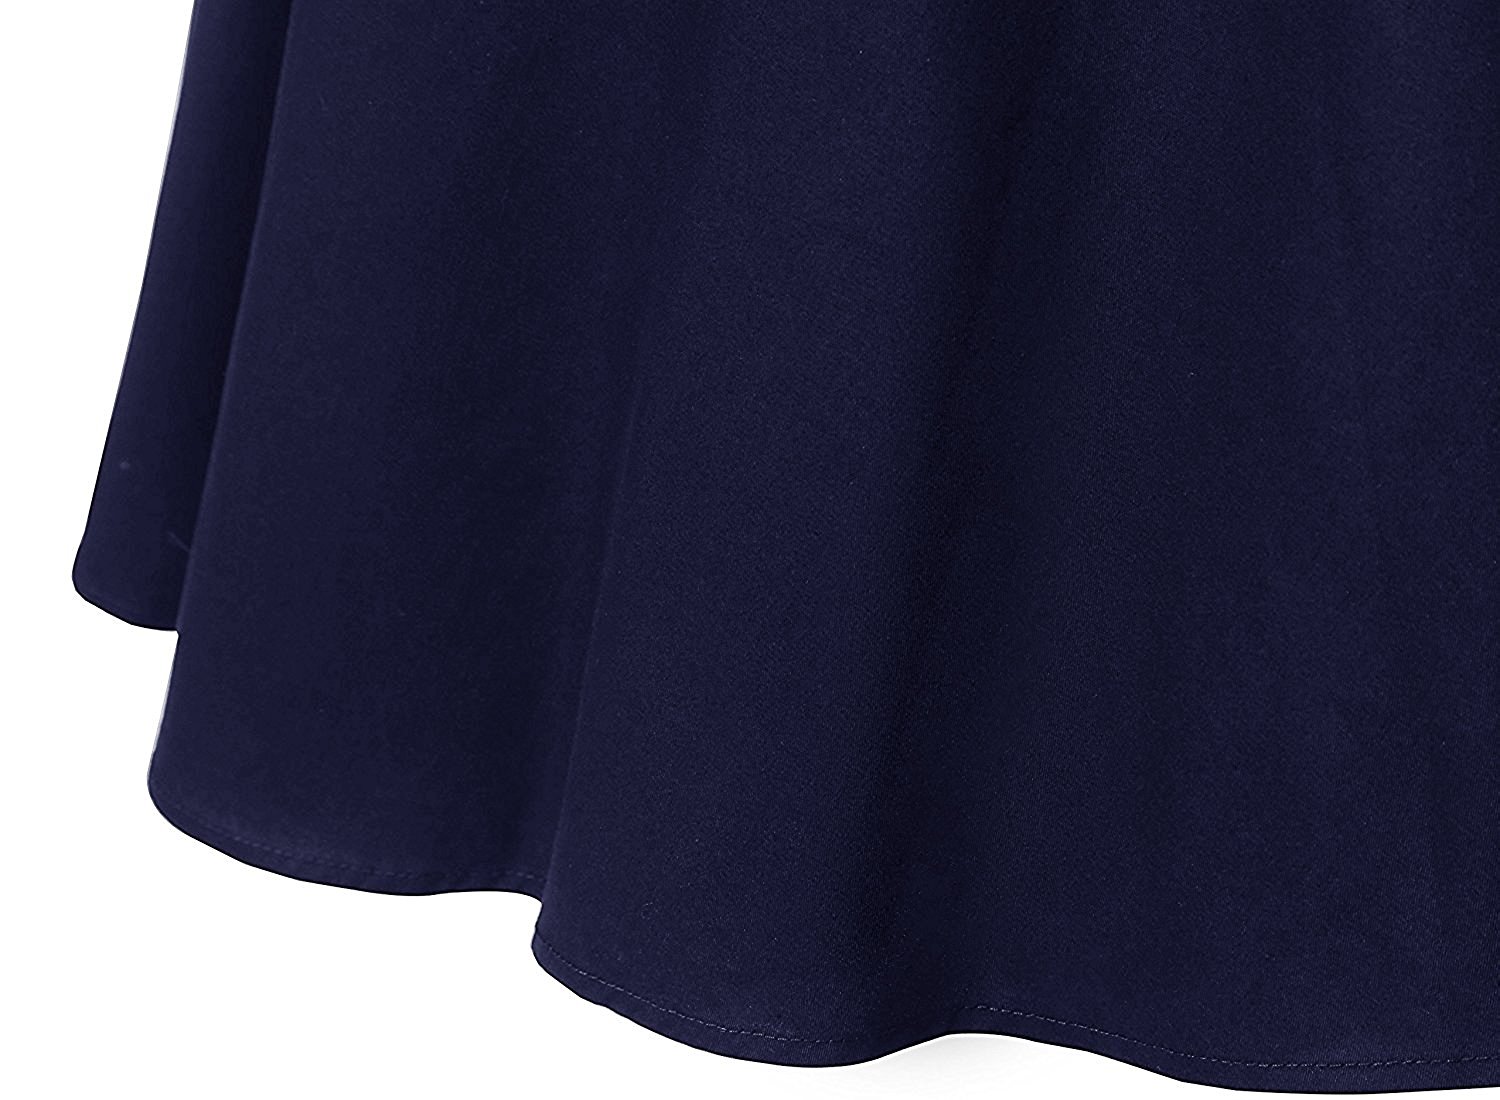 50s Rockabilly Style Halter Dark Blue Polka Dots Vintage Dress on Luulla